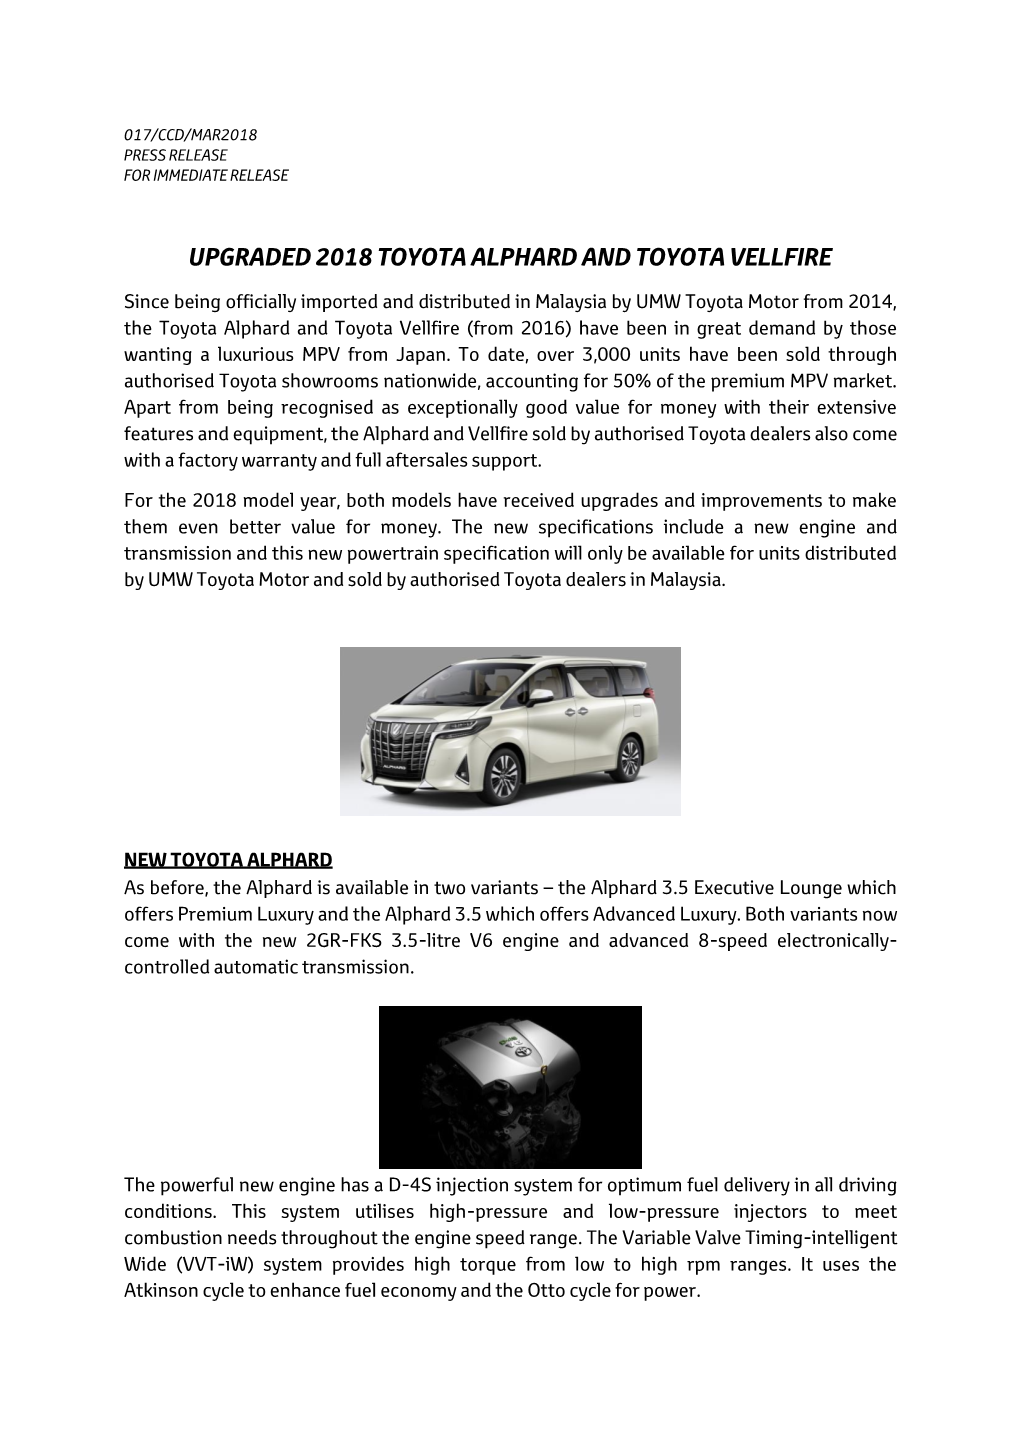 Upgraded 2018 Toyota Alphard and Toyota Vellfire